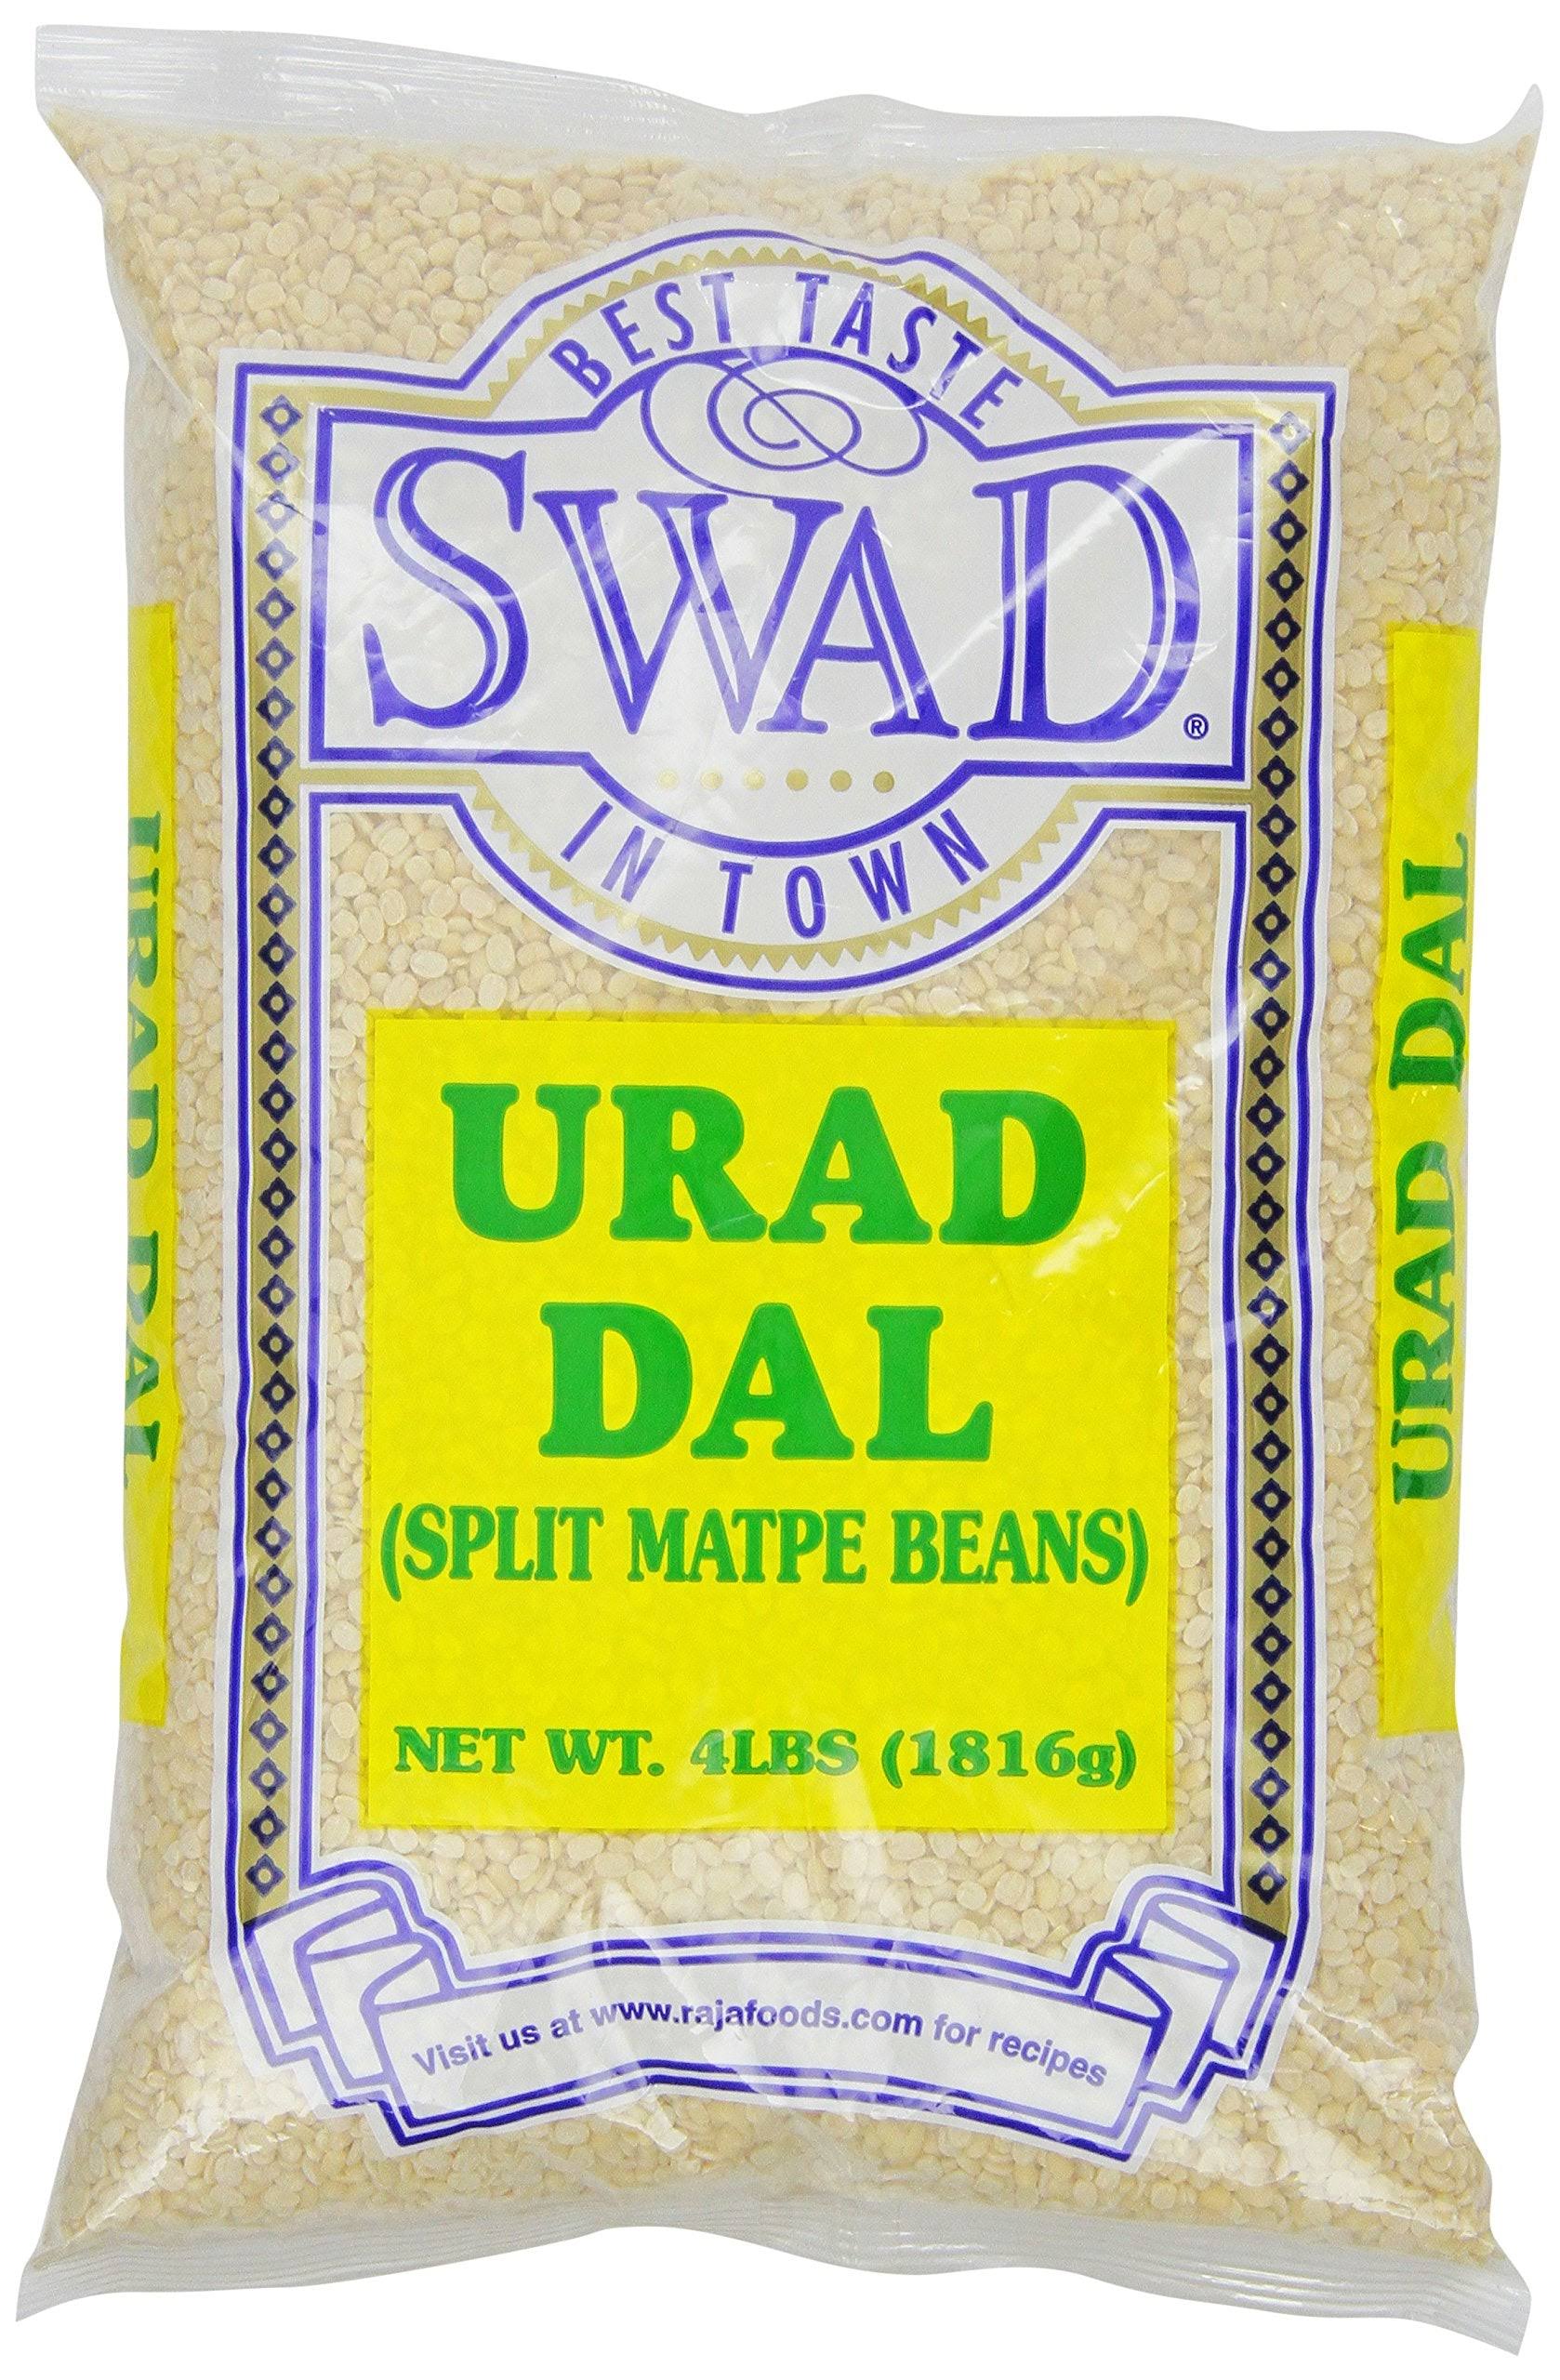 Swad Urad Dal Split Matpe Beans Bag - 4lb